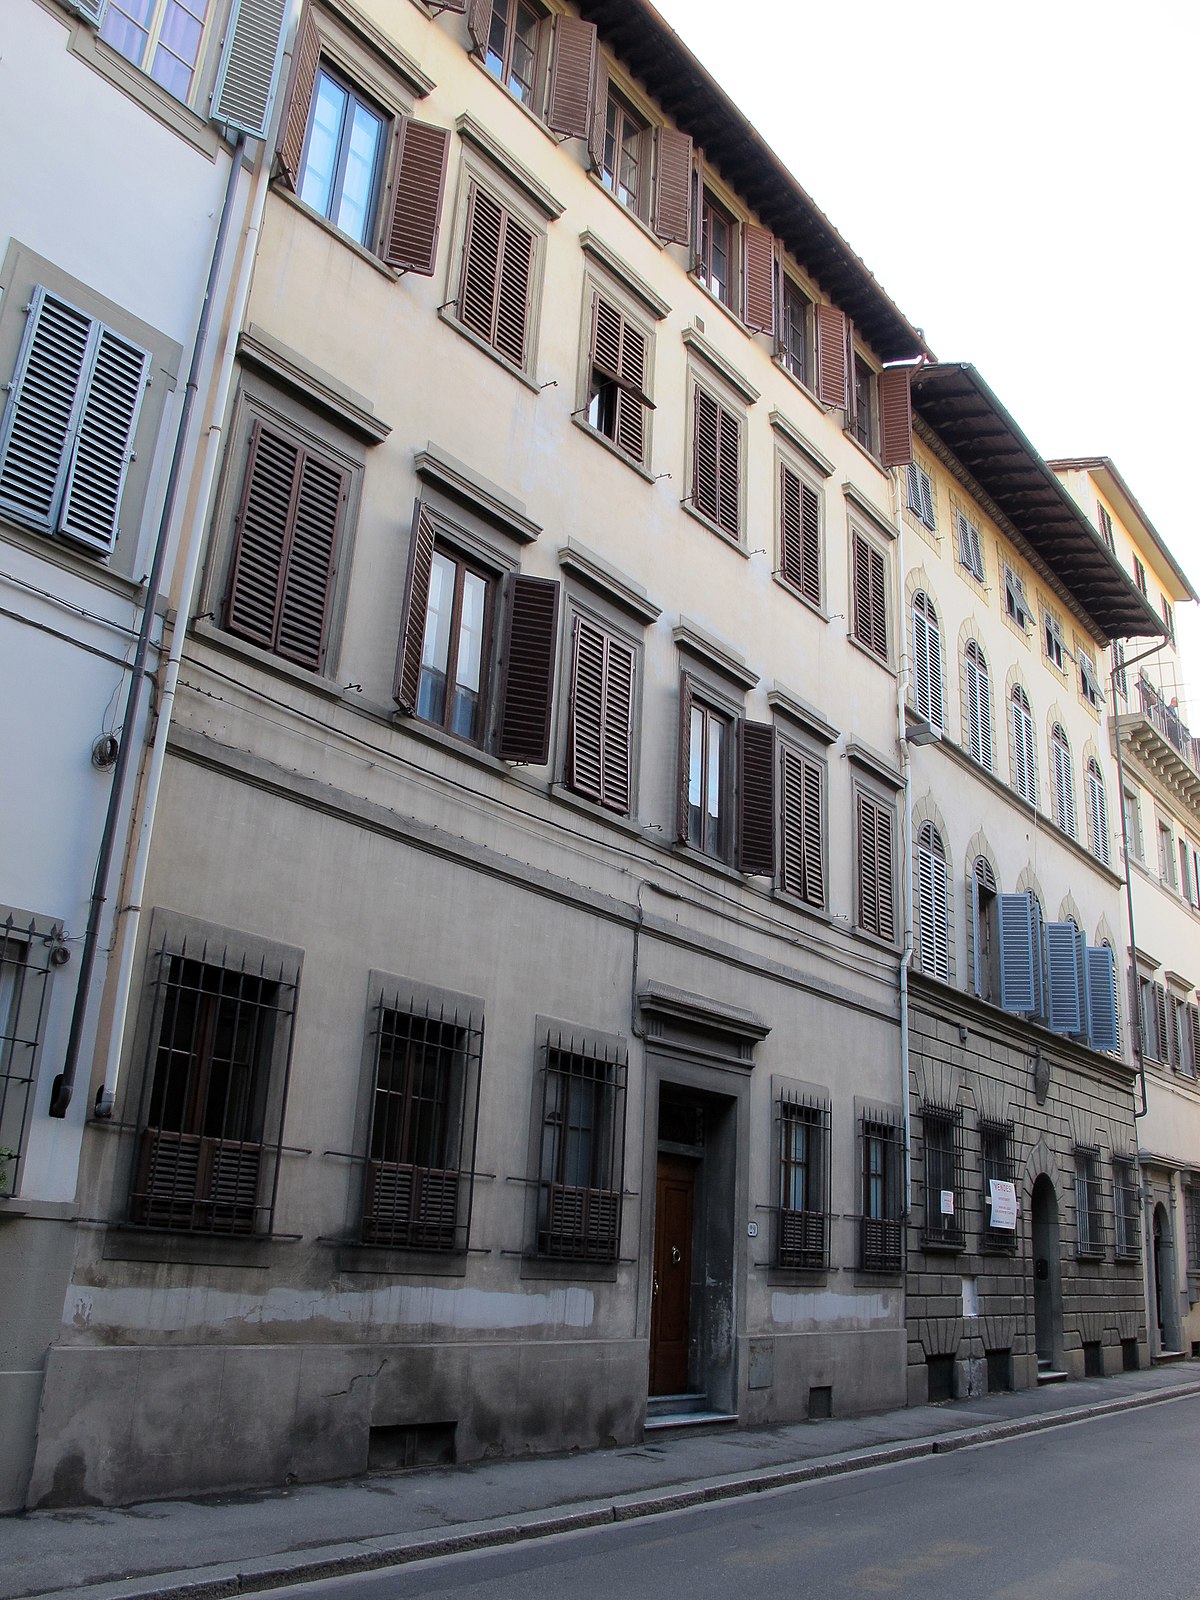 Casa di Jacopo Pontormo - Wikipedia